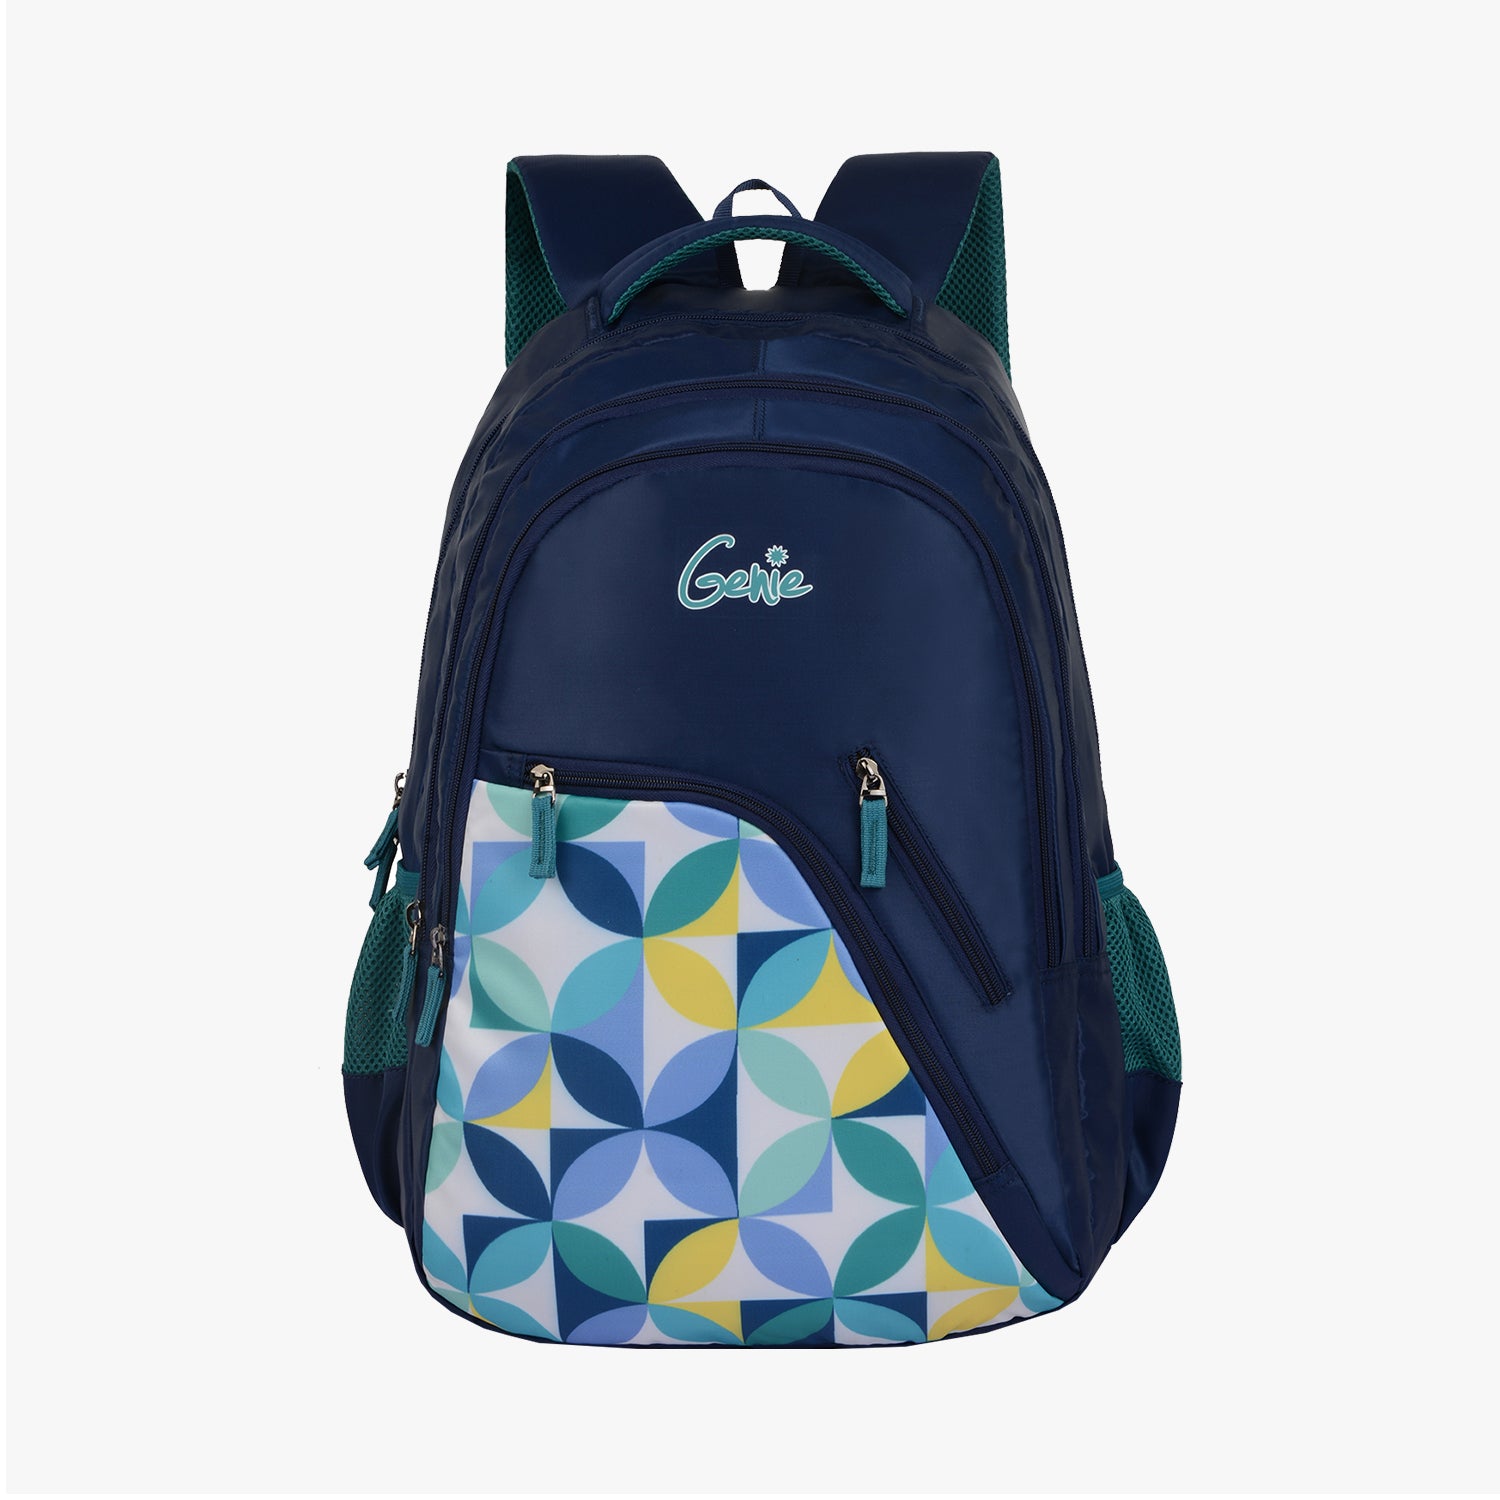 Corium Trends - Buy School Bags & Get Free pouch worth Rs.400 only at  Corium. #schoolbags #bags #free #pouch #genie #school #kidsbags #kids  #backbags #annanagar #shanthicolony https://ift.tt/2Ht3gOQ | Facebook